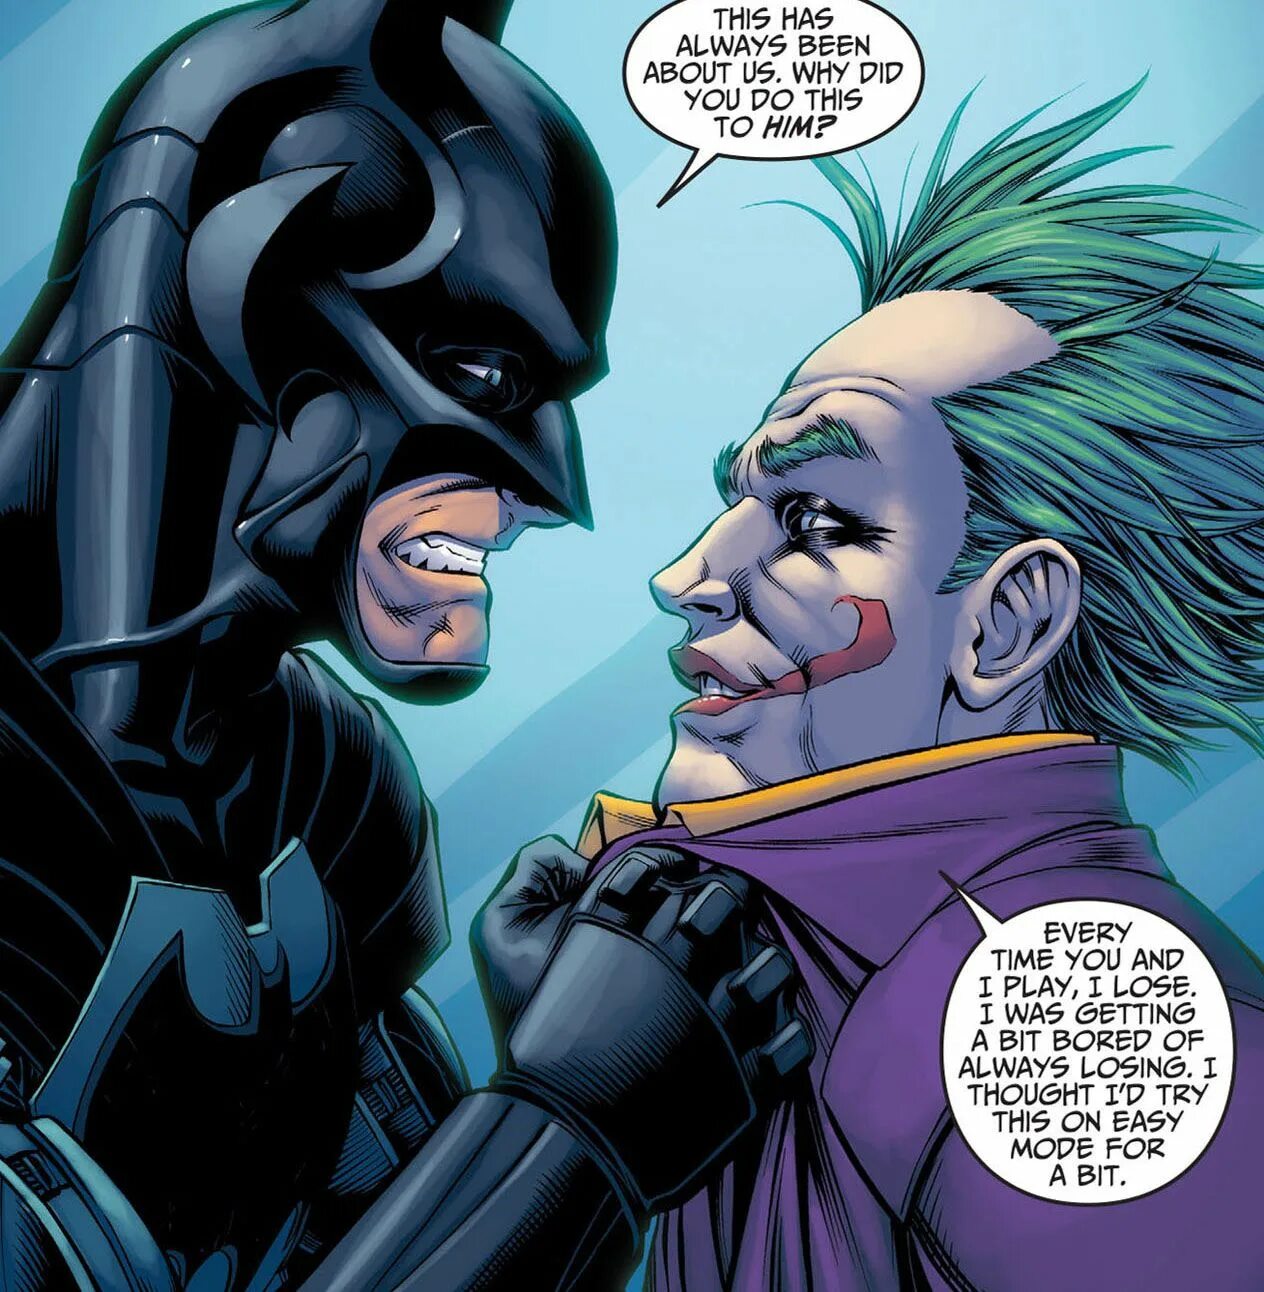 Batman kills. Injustice комикс Бэтмен убивает Джокера. Инджастис Джокер и Супермен. Бэтмен Инджастис комикс.